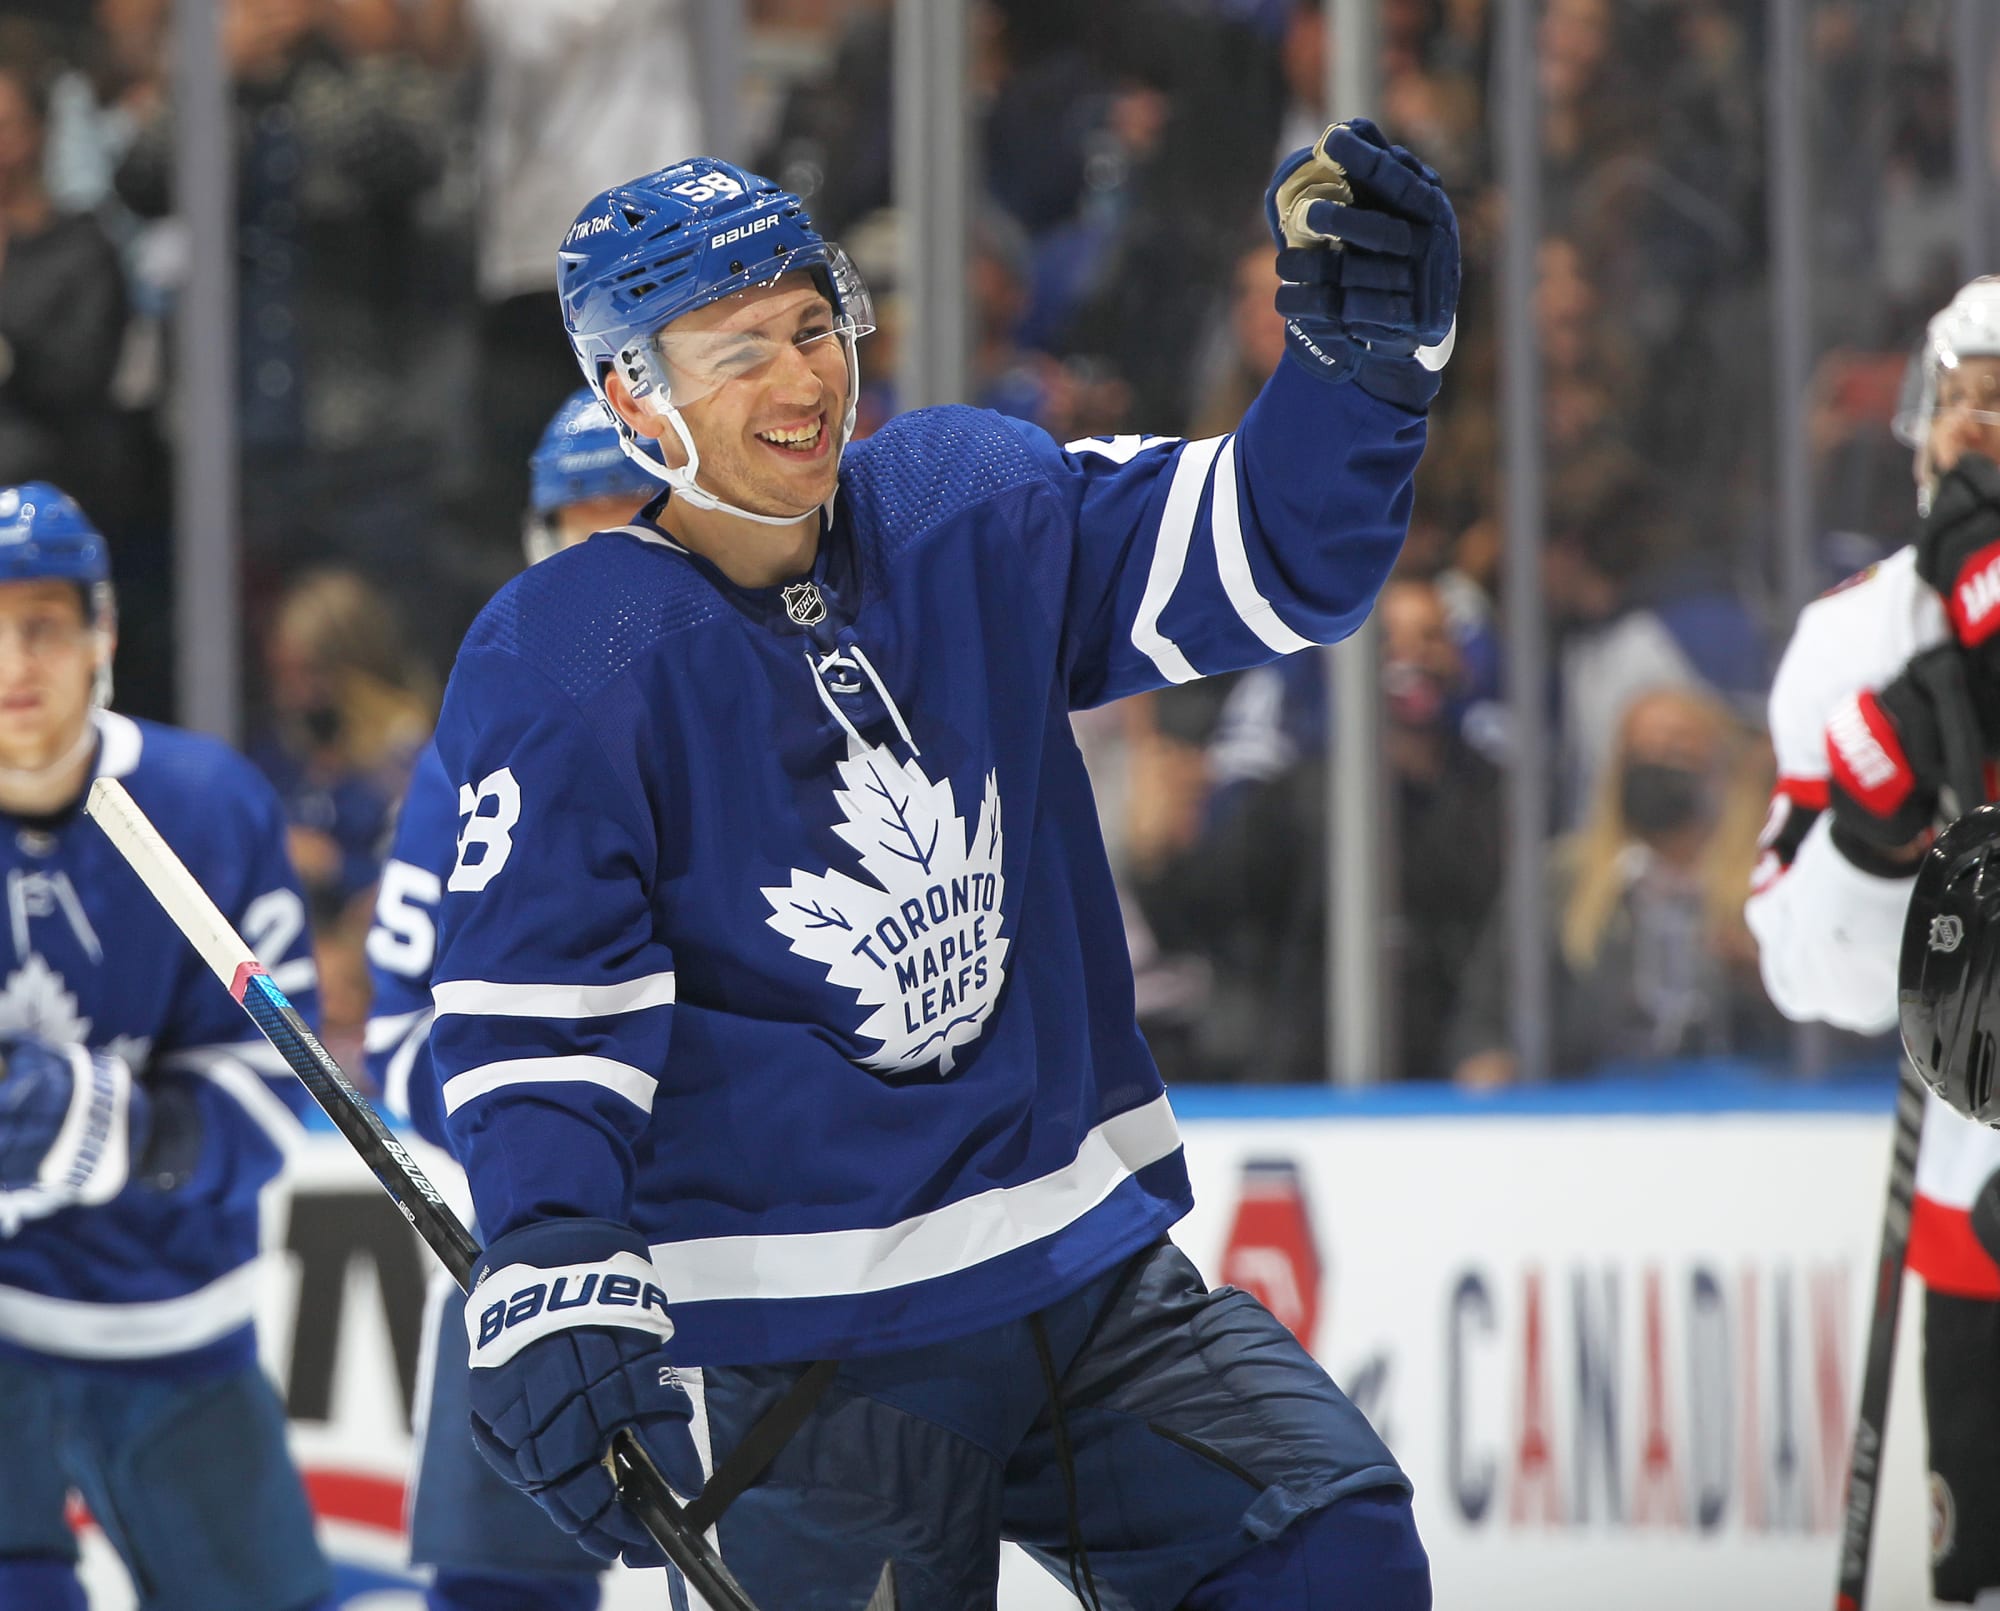 Kerfoot, Bunting help Maple Leafs defeat Senators